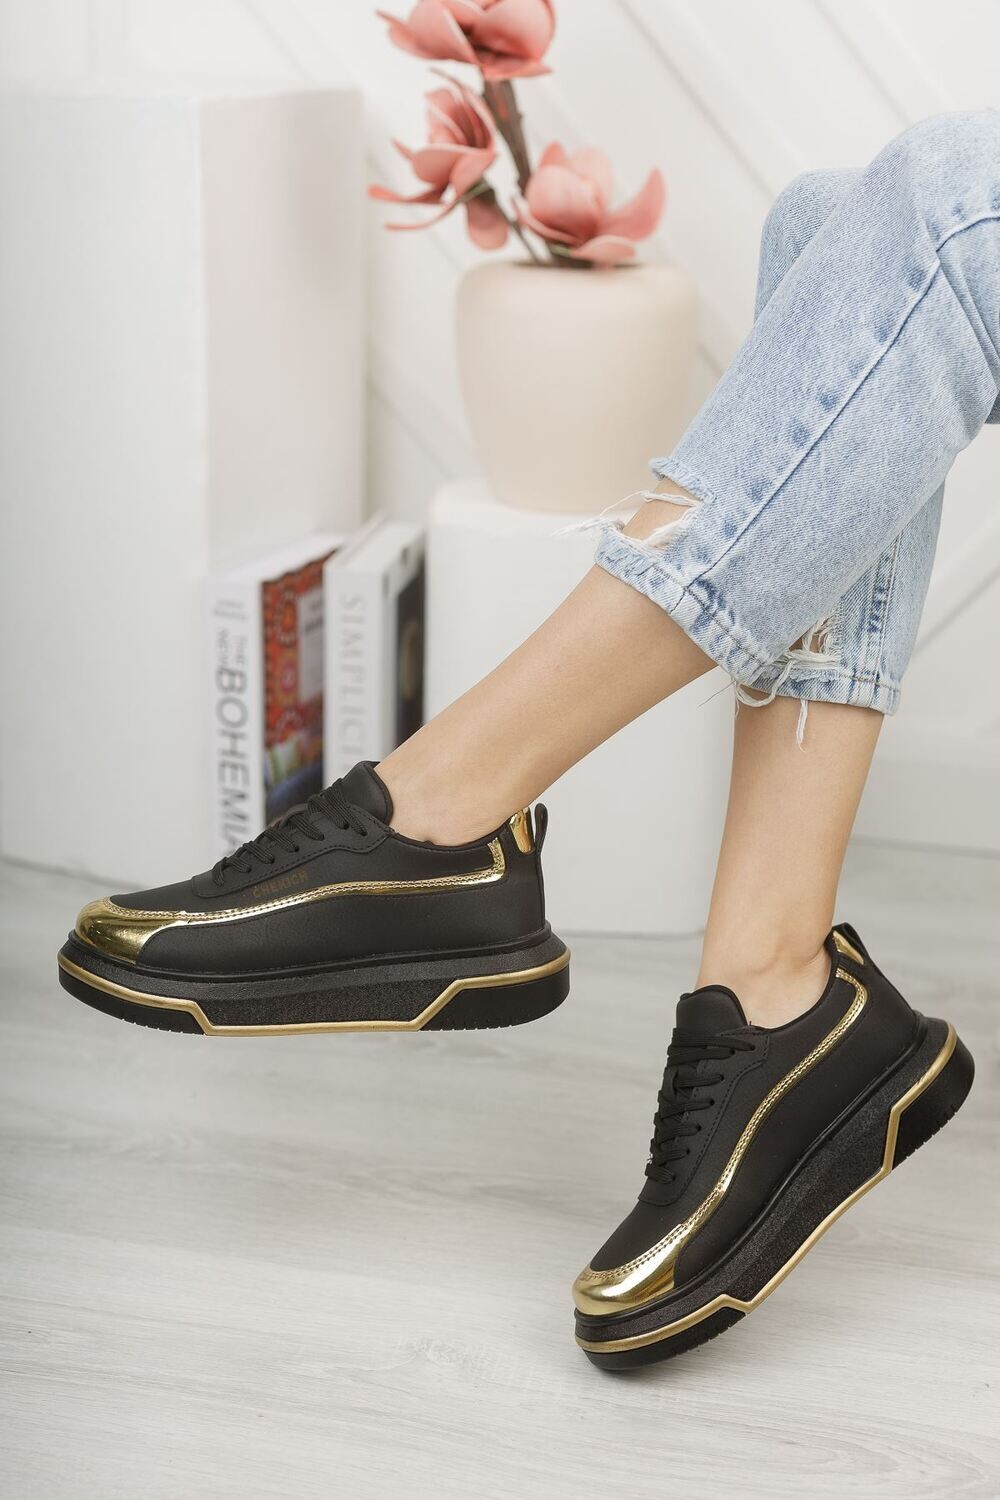 Chekich CH041 ST Women's Shoes BLACK / GOLD